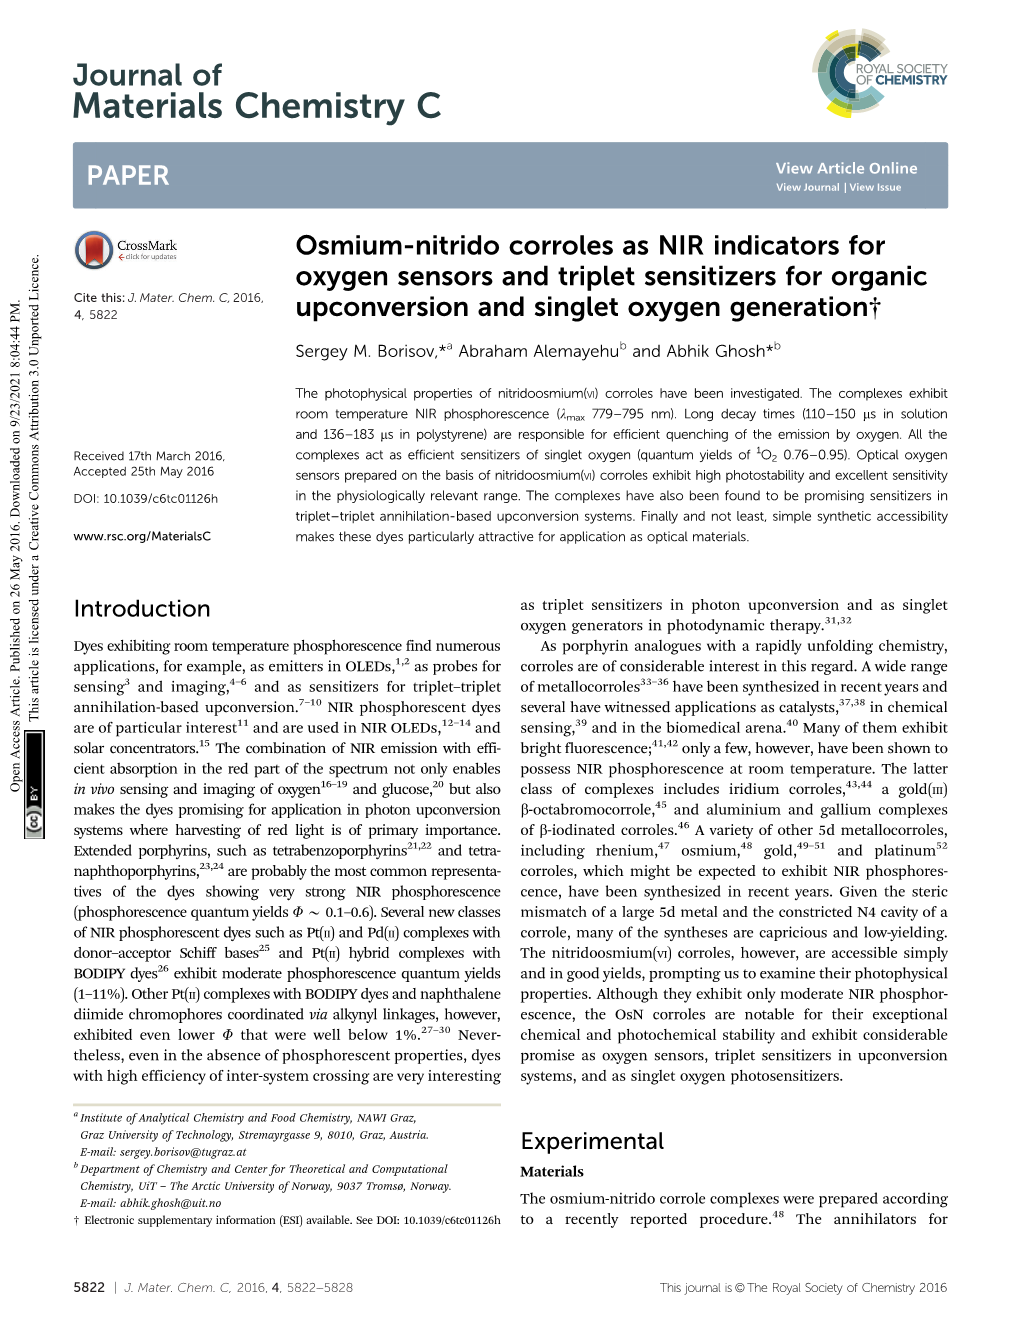 Osmium-Nitrido Corroles As NIR Indicators for Oxygen Sensors and Triplet Sensitizers for Organic Cite This: J